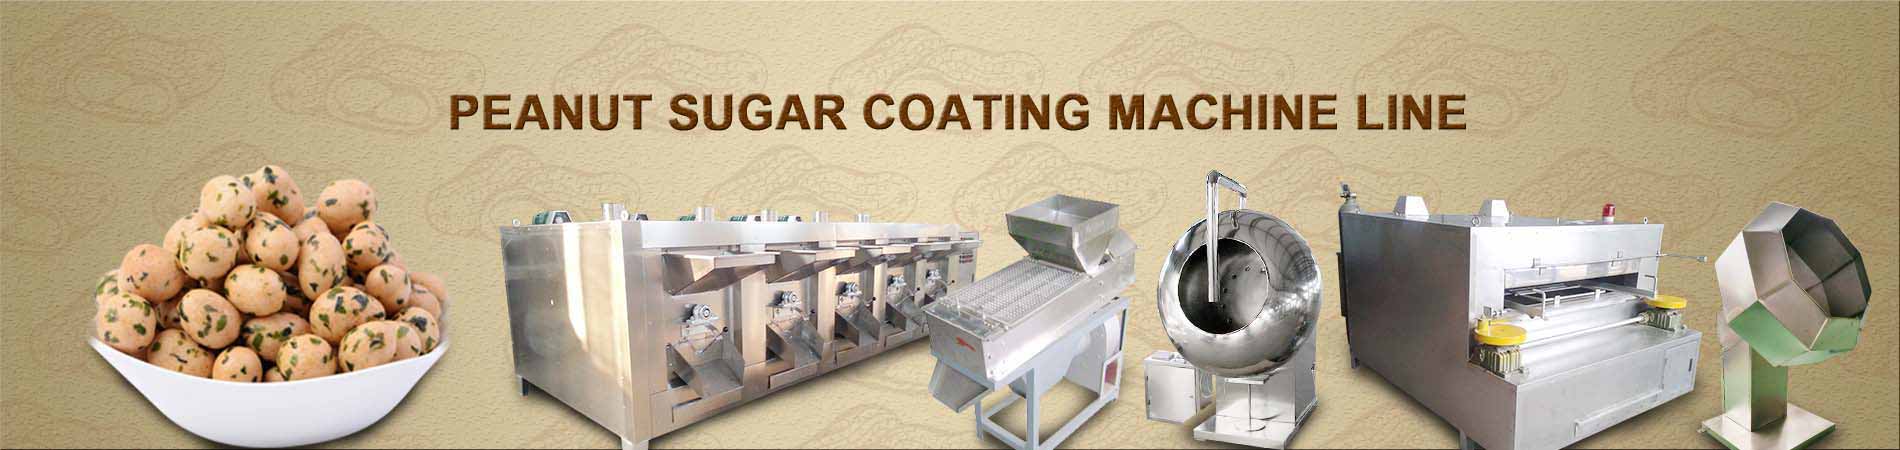 Peanut Sugar Coating Machine Line